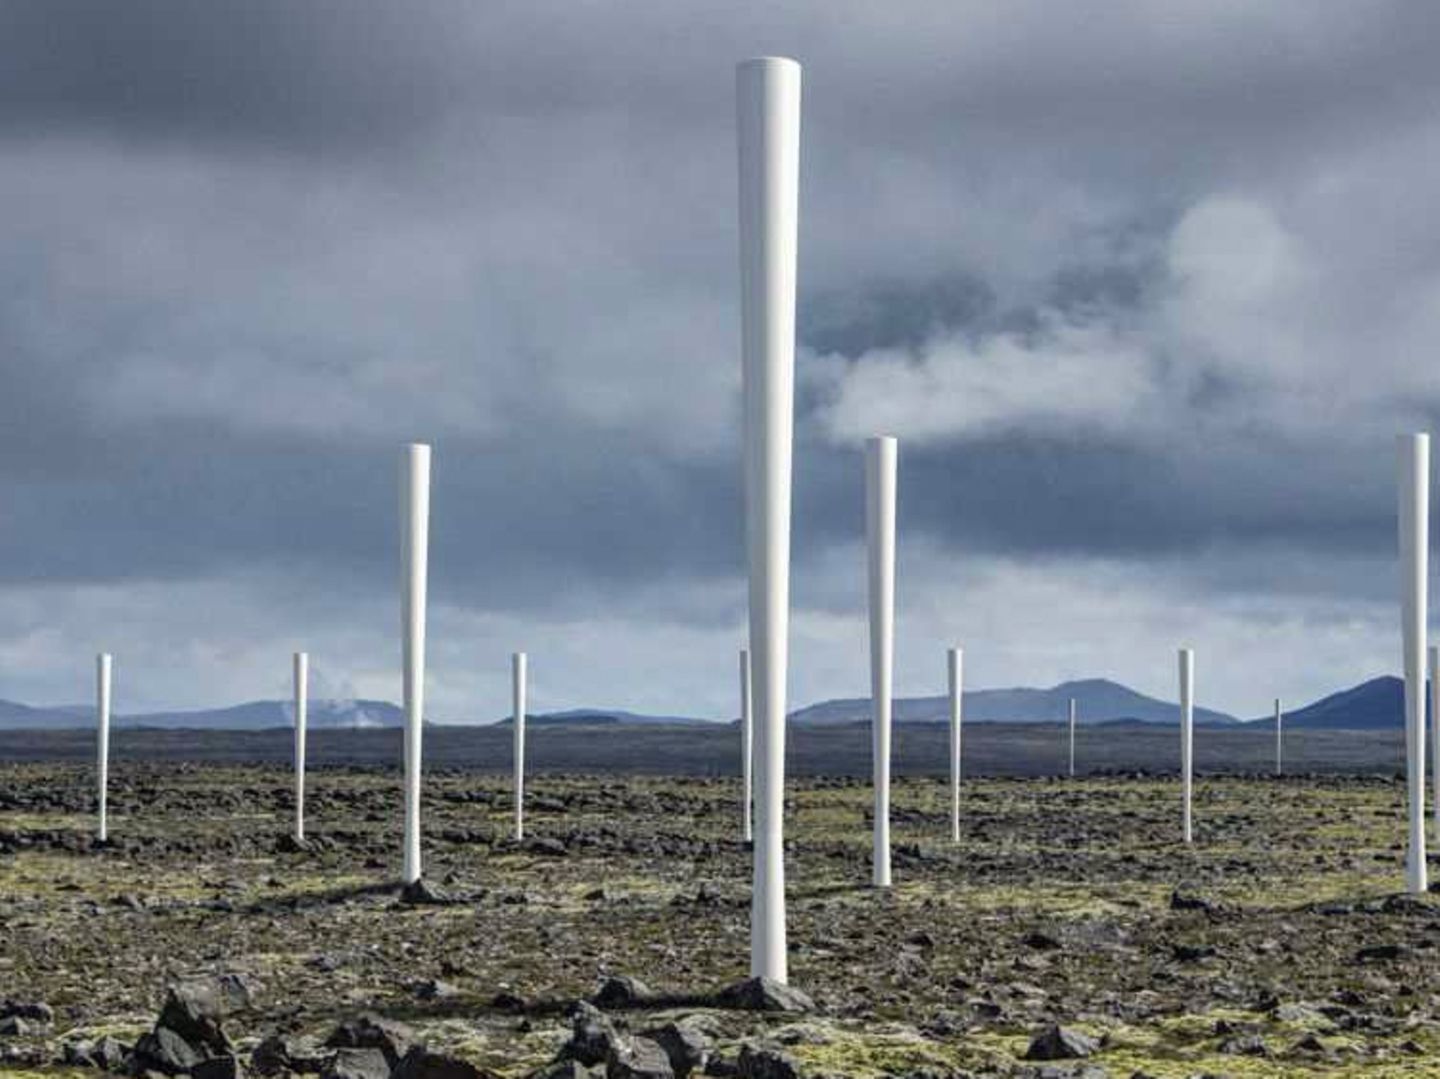 revolt Windrad: Windgenerator für 12-Volt-Systeme, 300 Watt (Windkraftanlage )